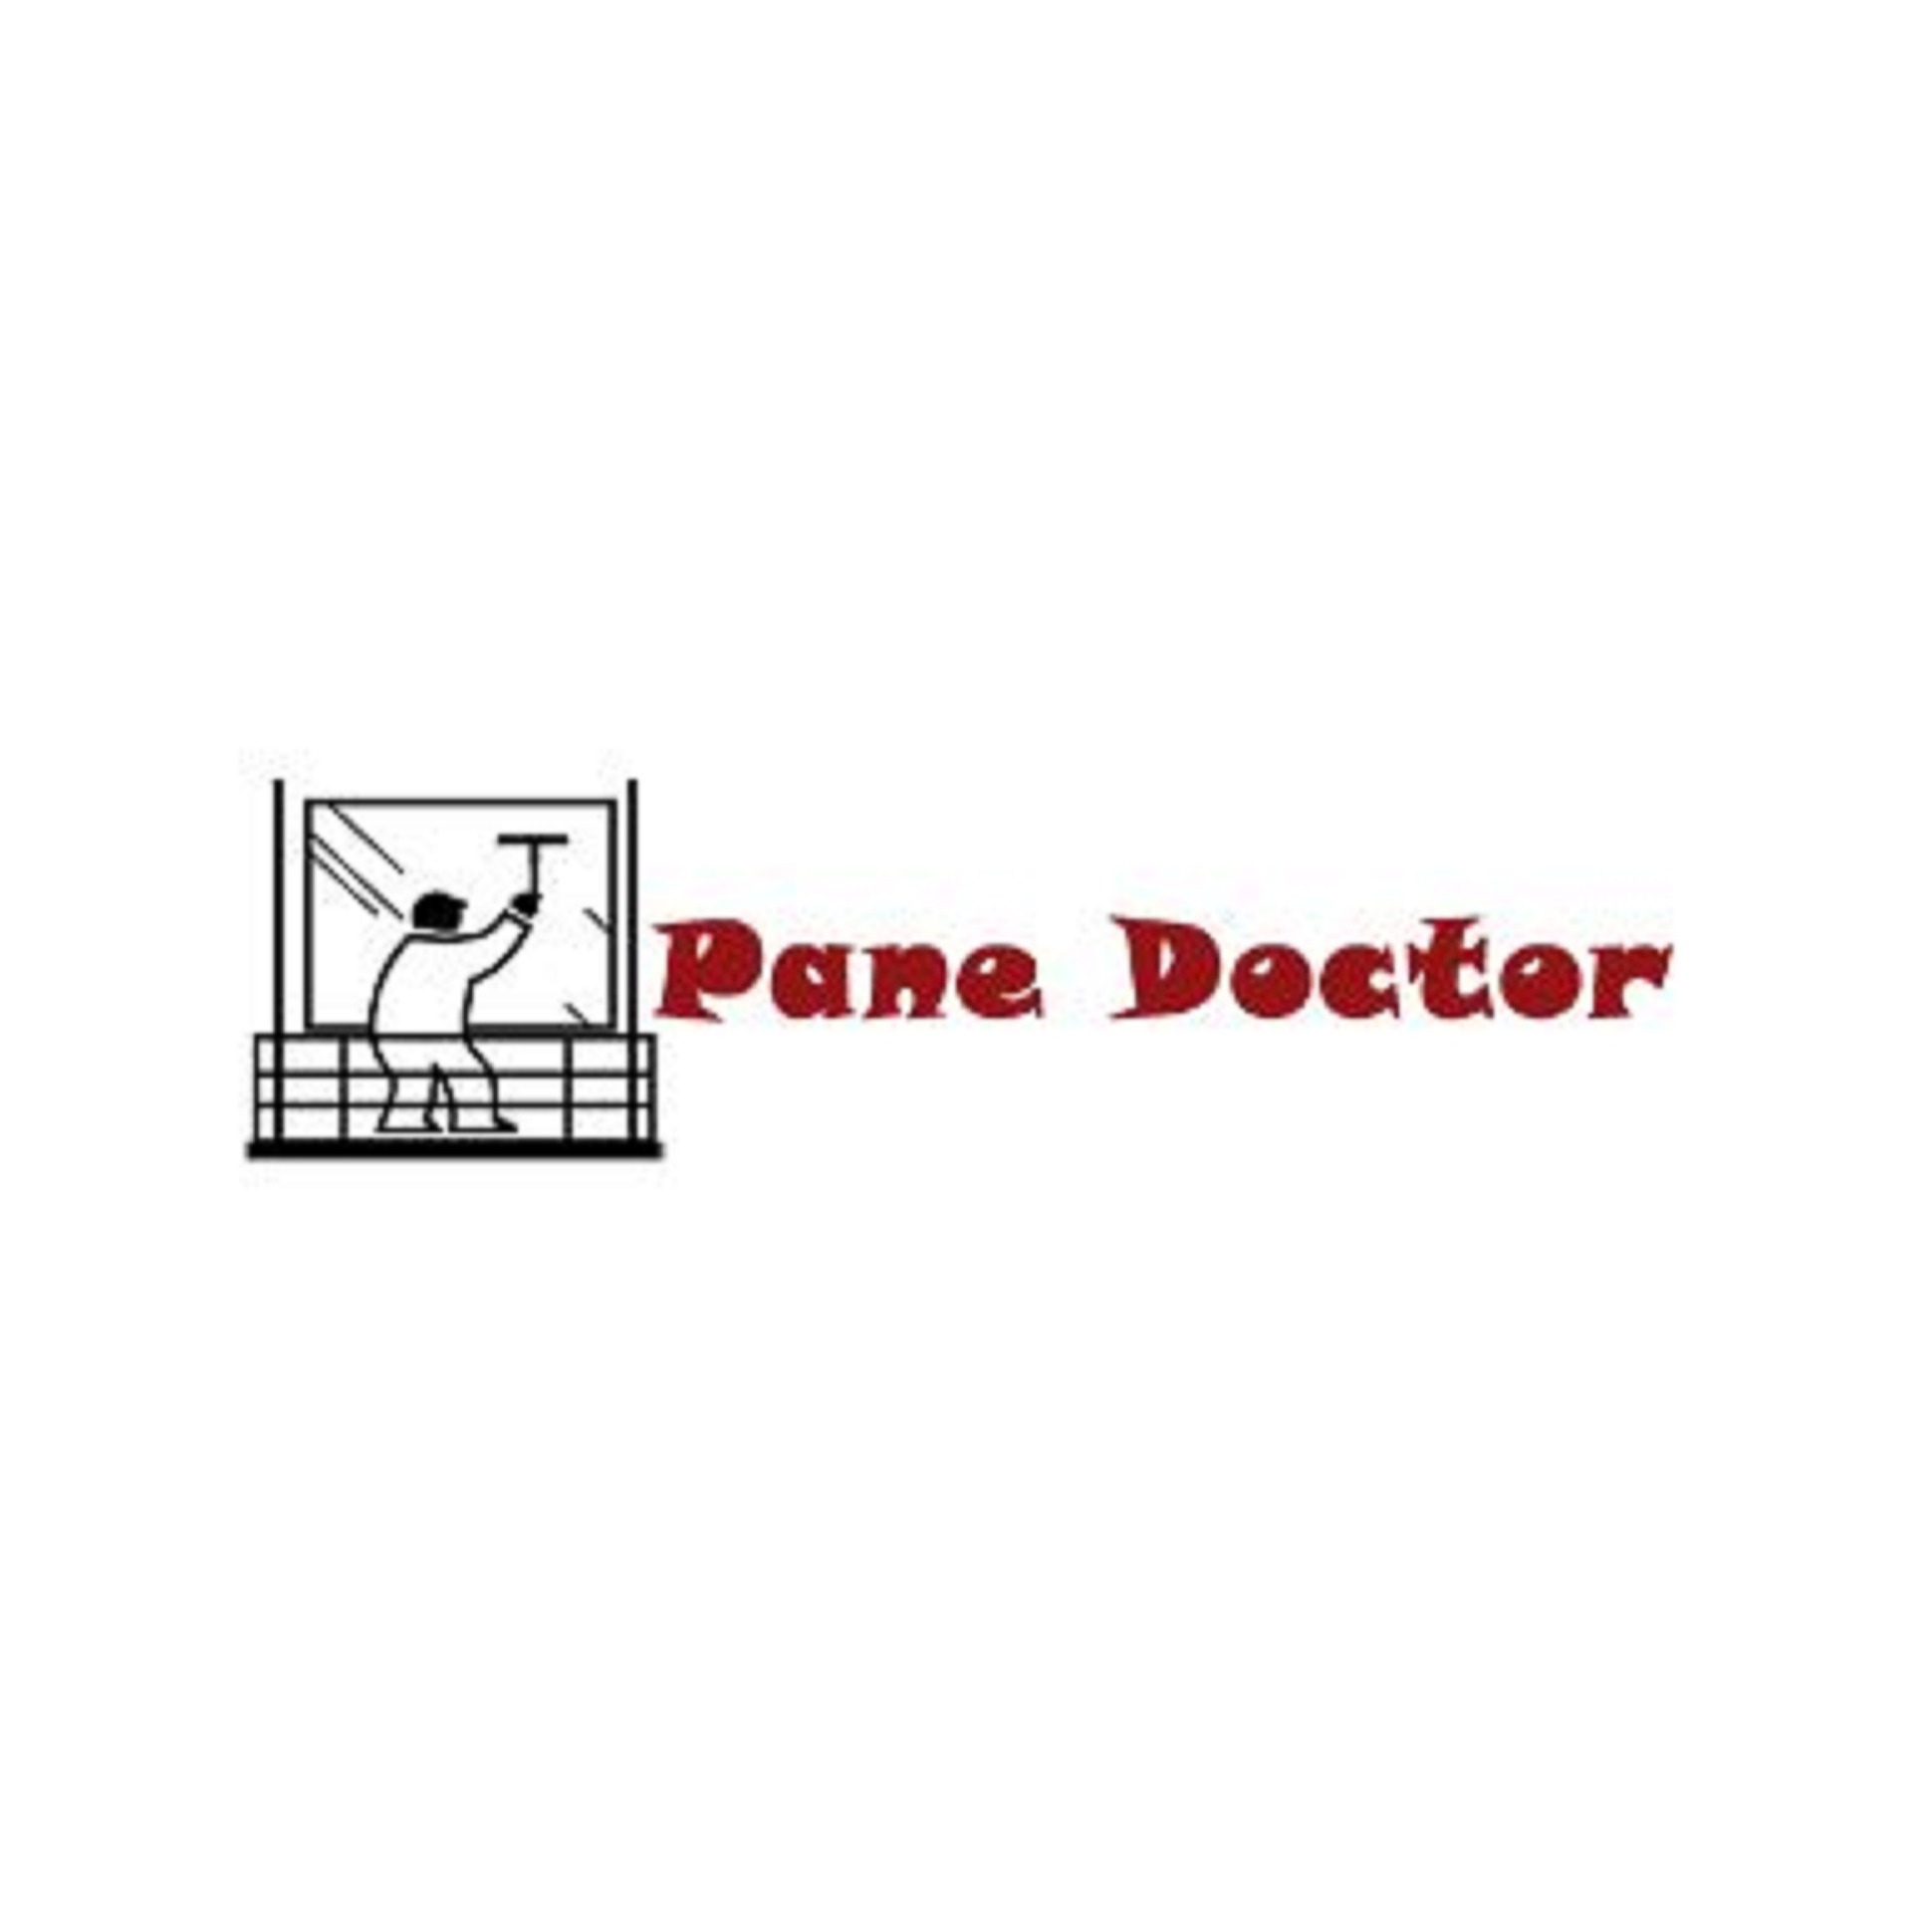 Pane Doctor Window Cleaning Logo